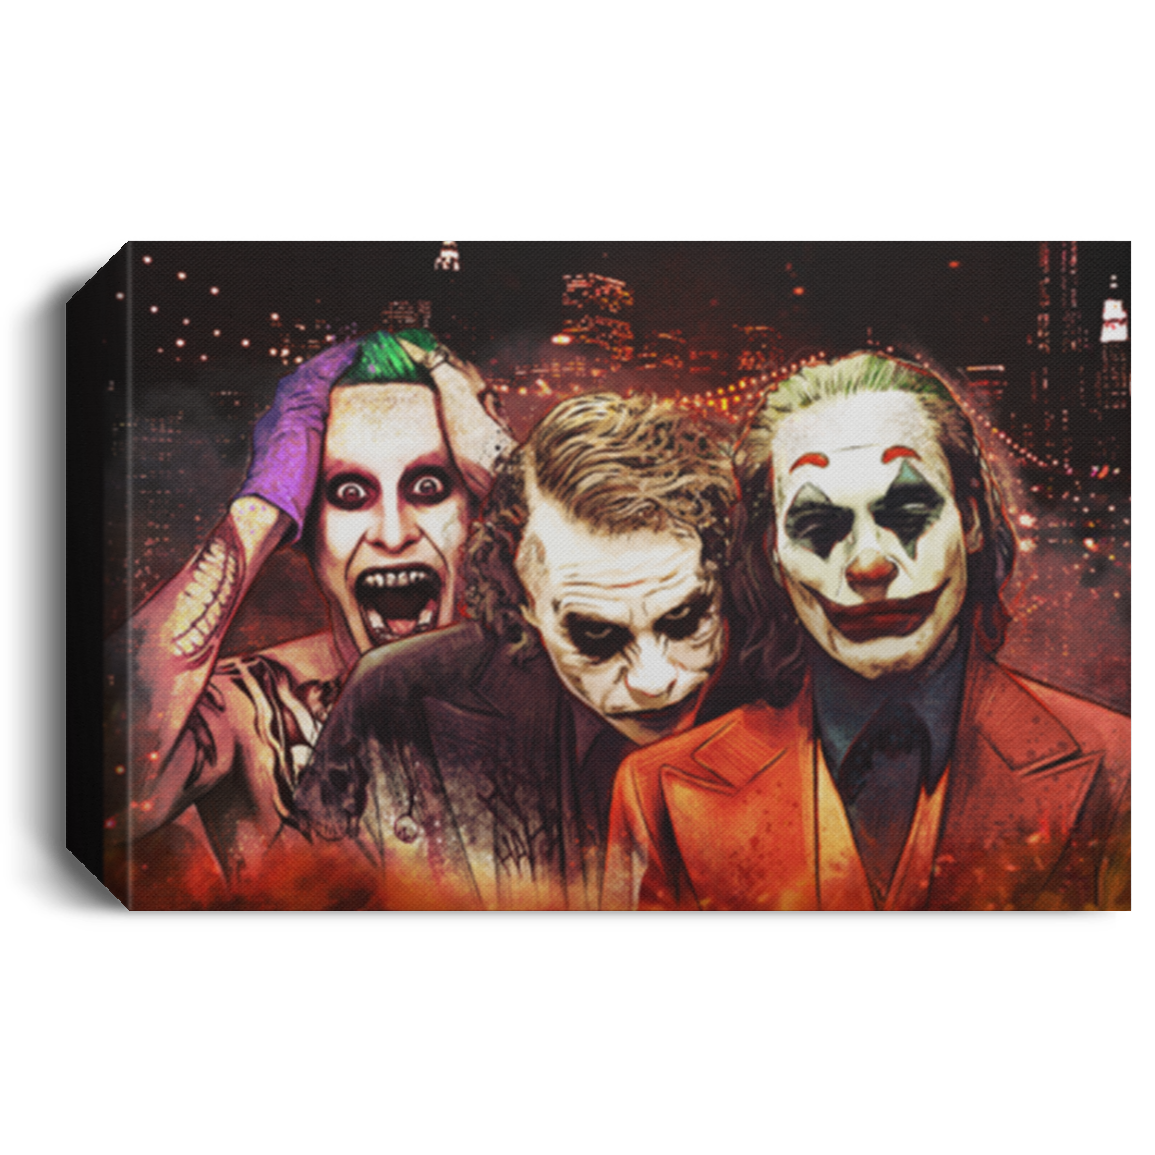 The 3 Jokers